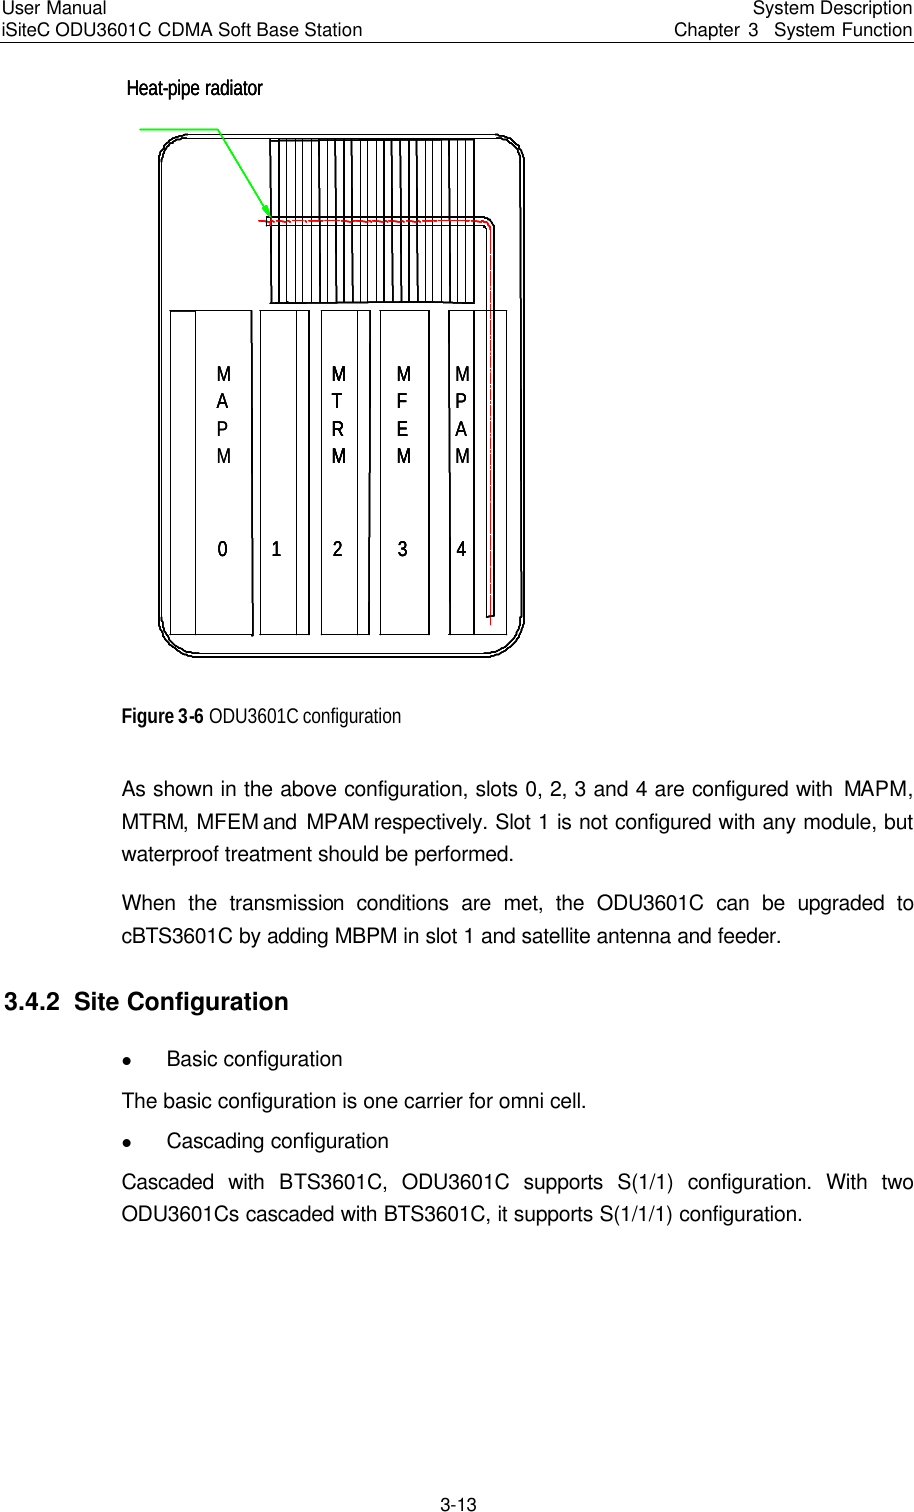 Page 43 of Huawei Technologies ODU3601C-800 CDMA Base Station User Manual 2